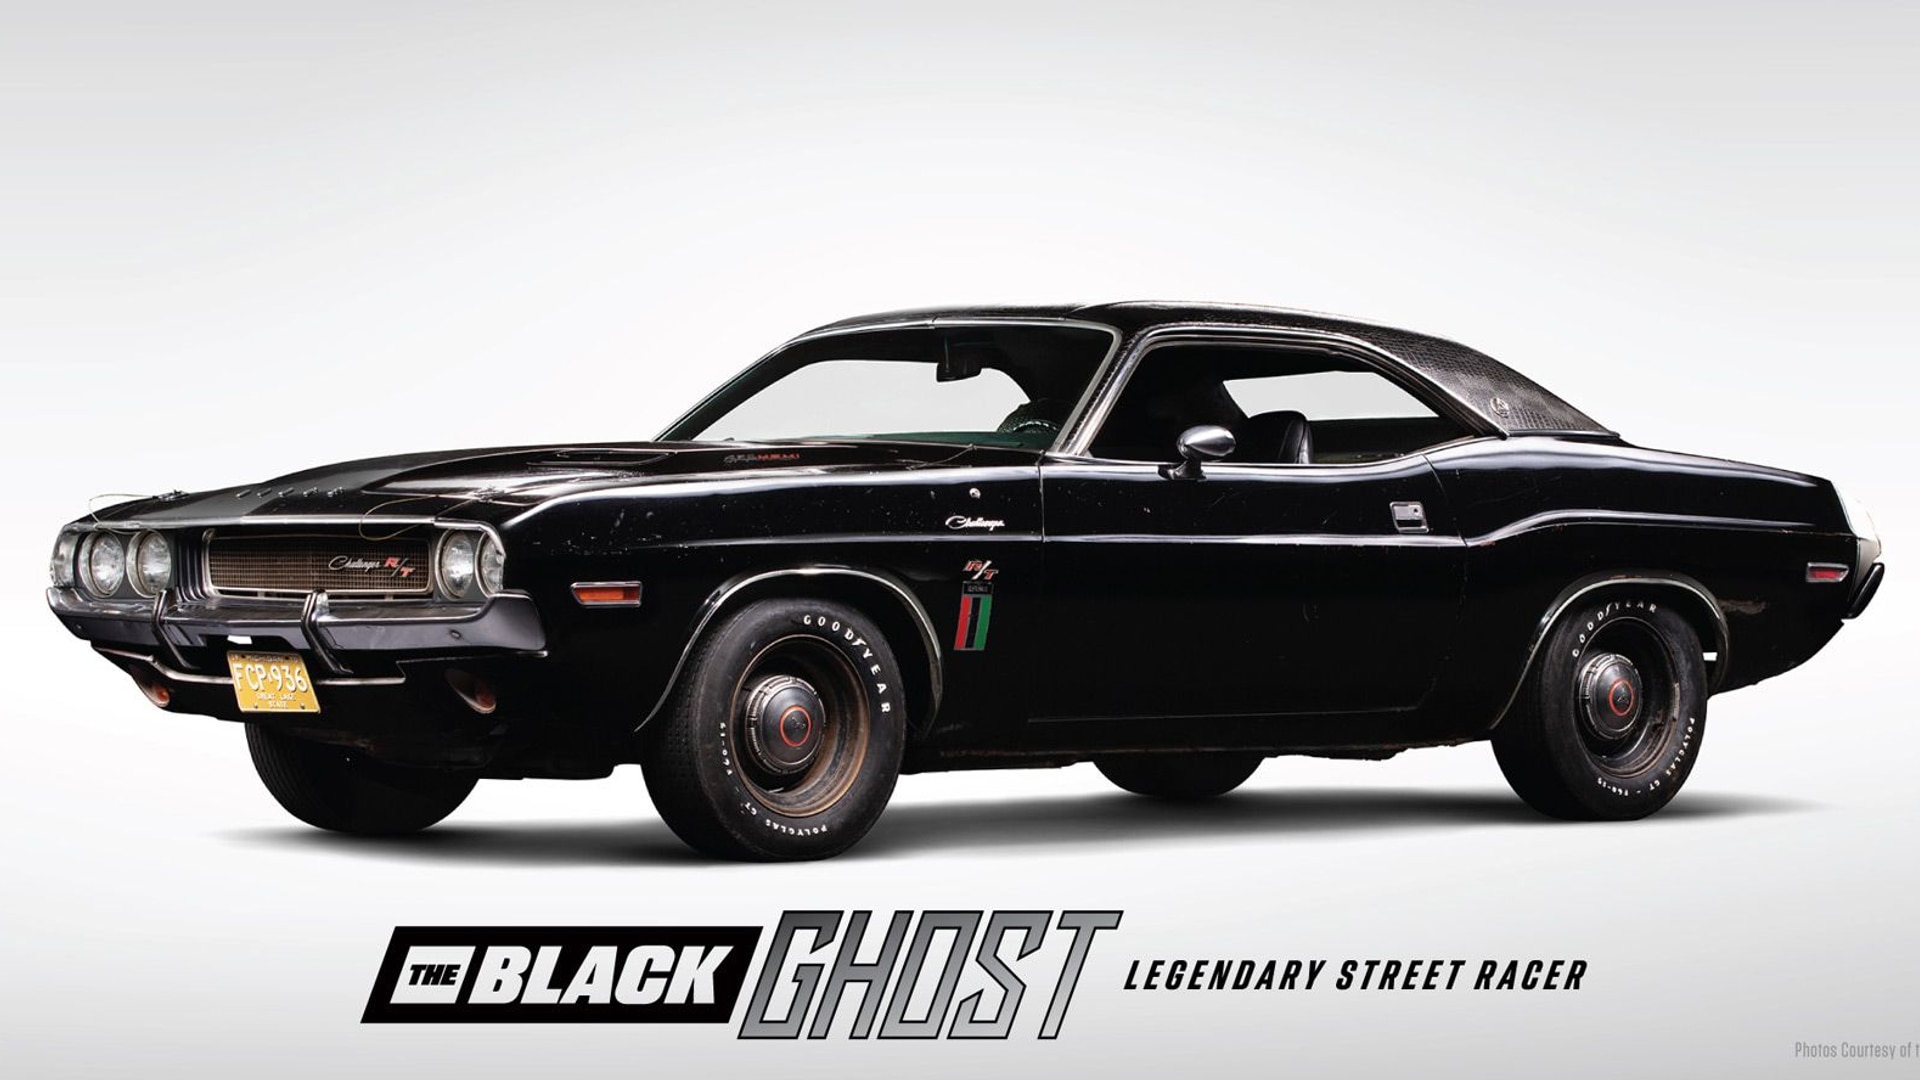 1970 Dodge Challenger R/T SE “Black Ghost” - Photo credit: Historic Vehicle Association